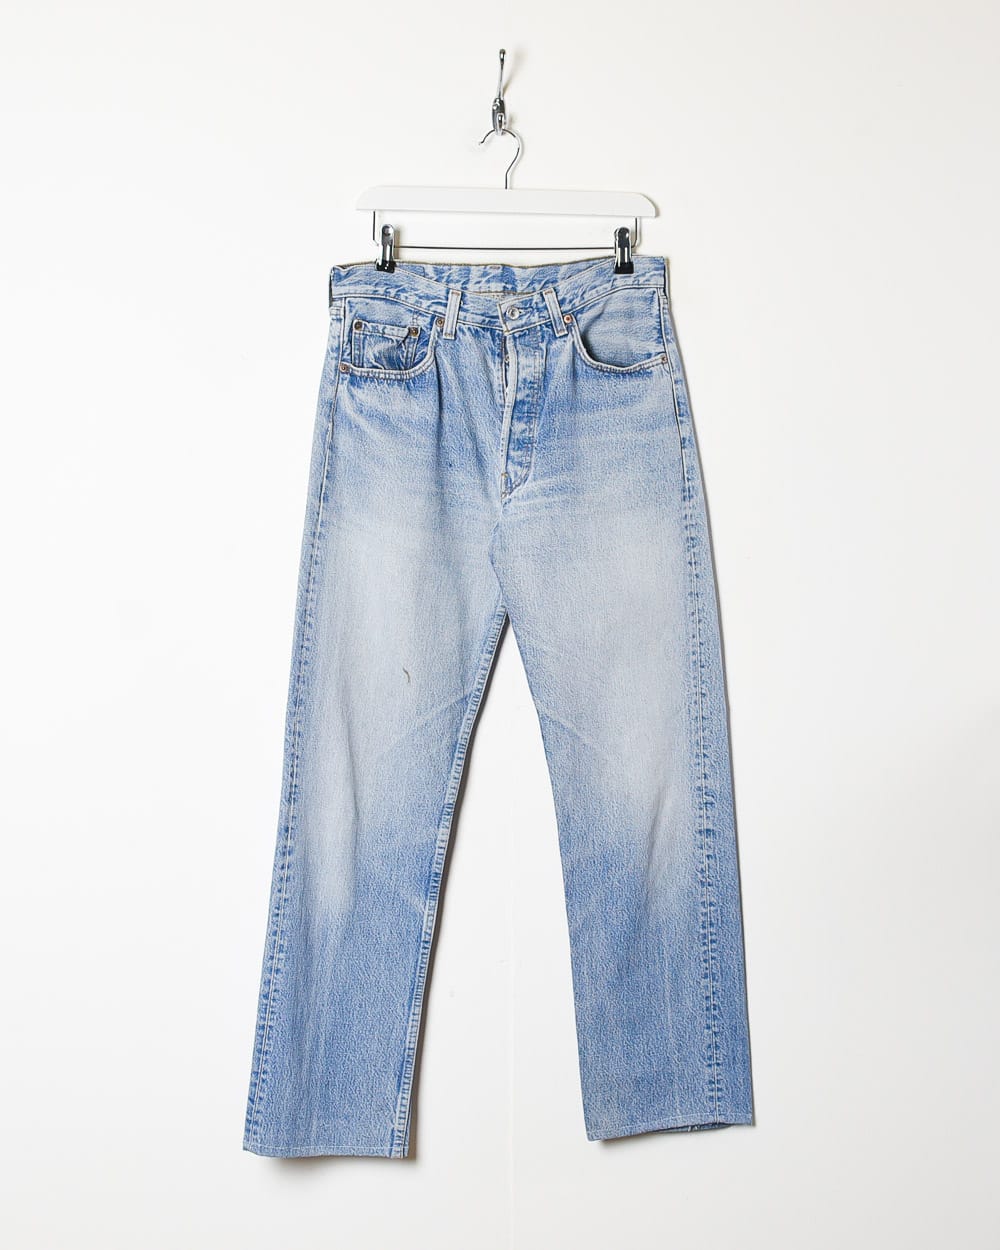 Baby Levi's 501 Jeans - W32 L32